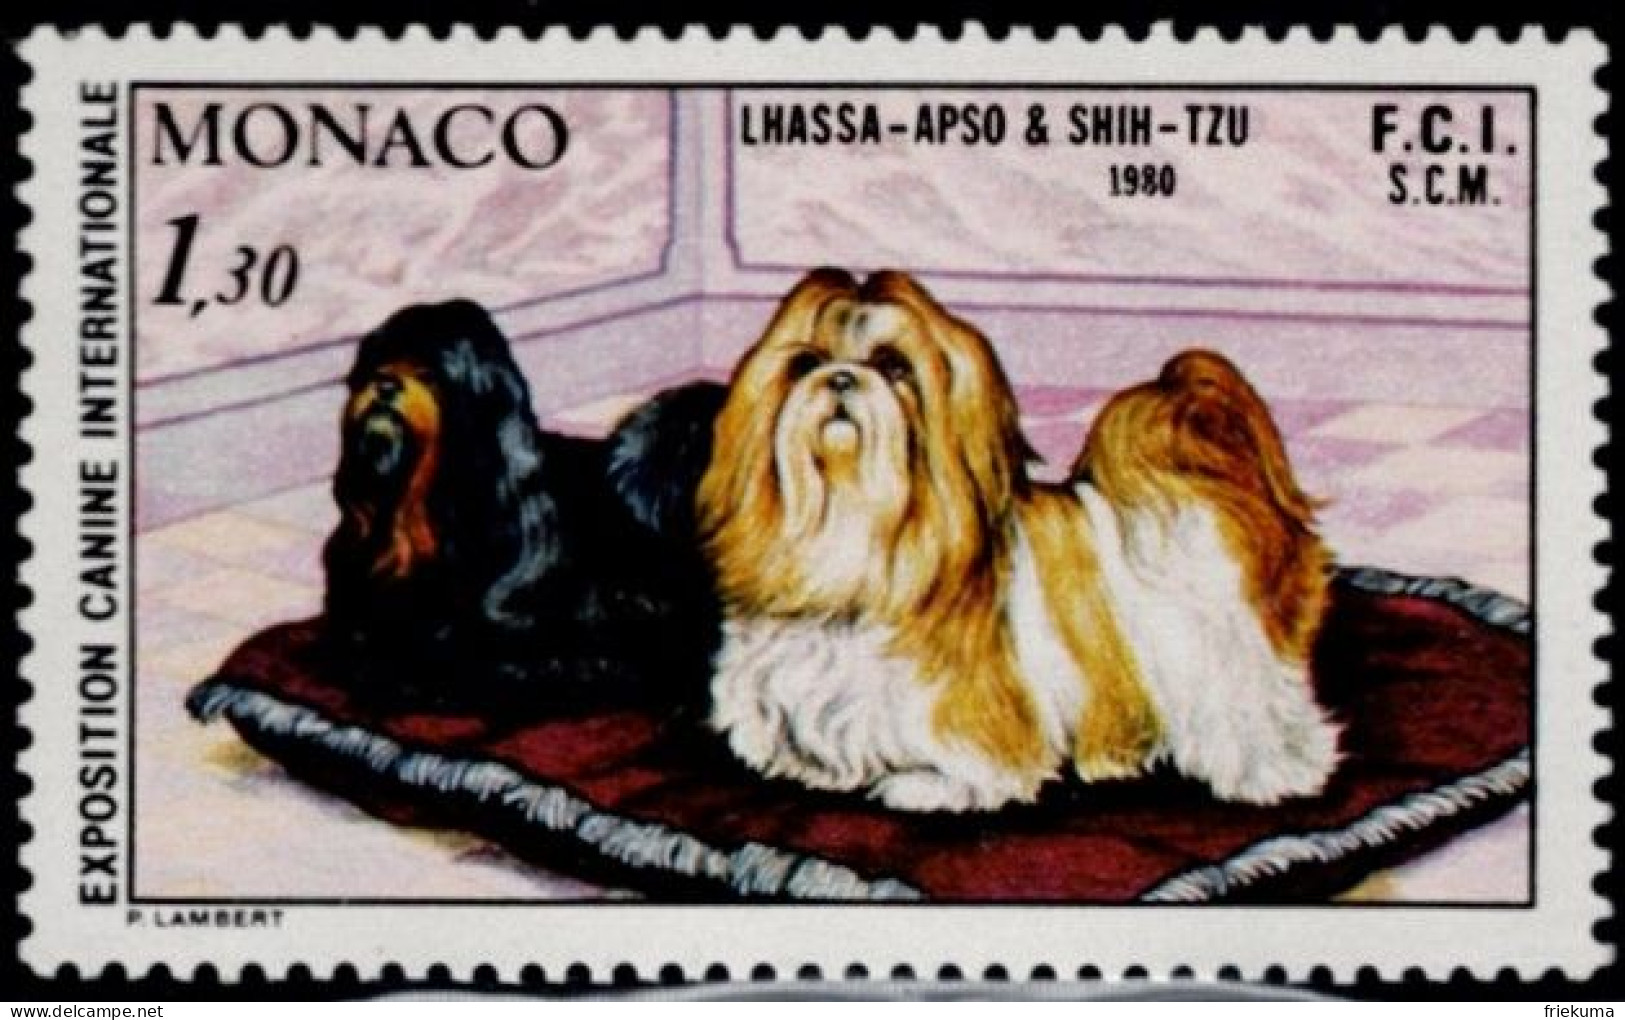 Monaco 1980, Exposition Canine Internationale/International Dog Show, Monte Carlo: Lhasa-Apso And Shih-Tzu, MiNr. 1035 - Chiens